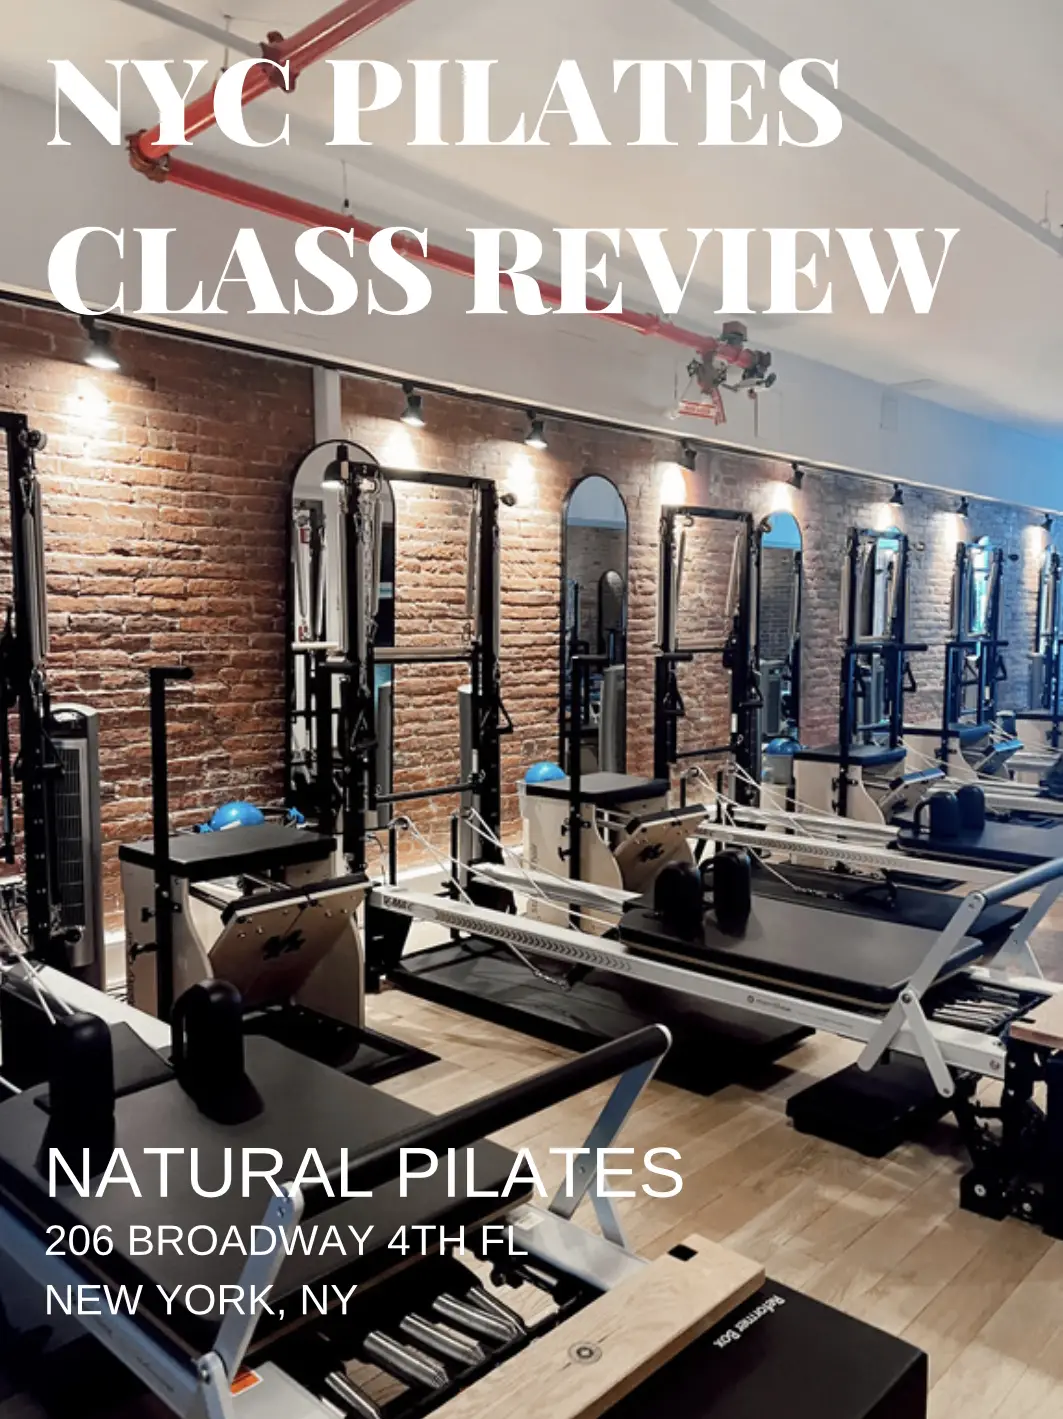 NYC PILATES CLASS REVIEW: Natural Pilates